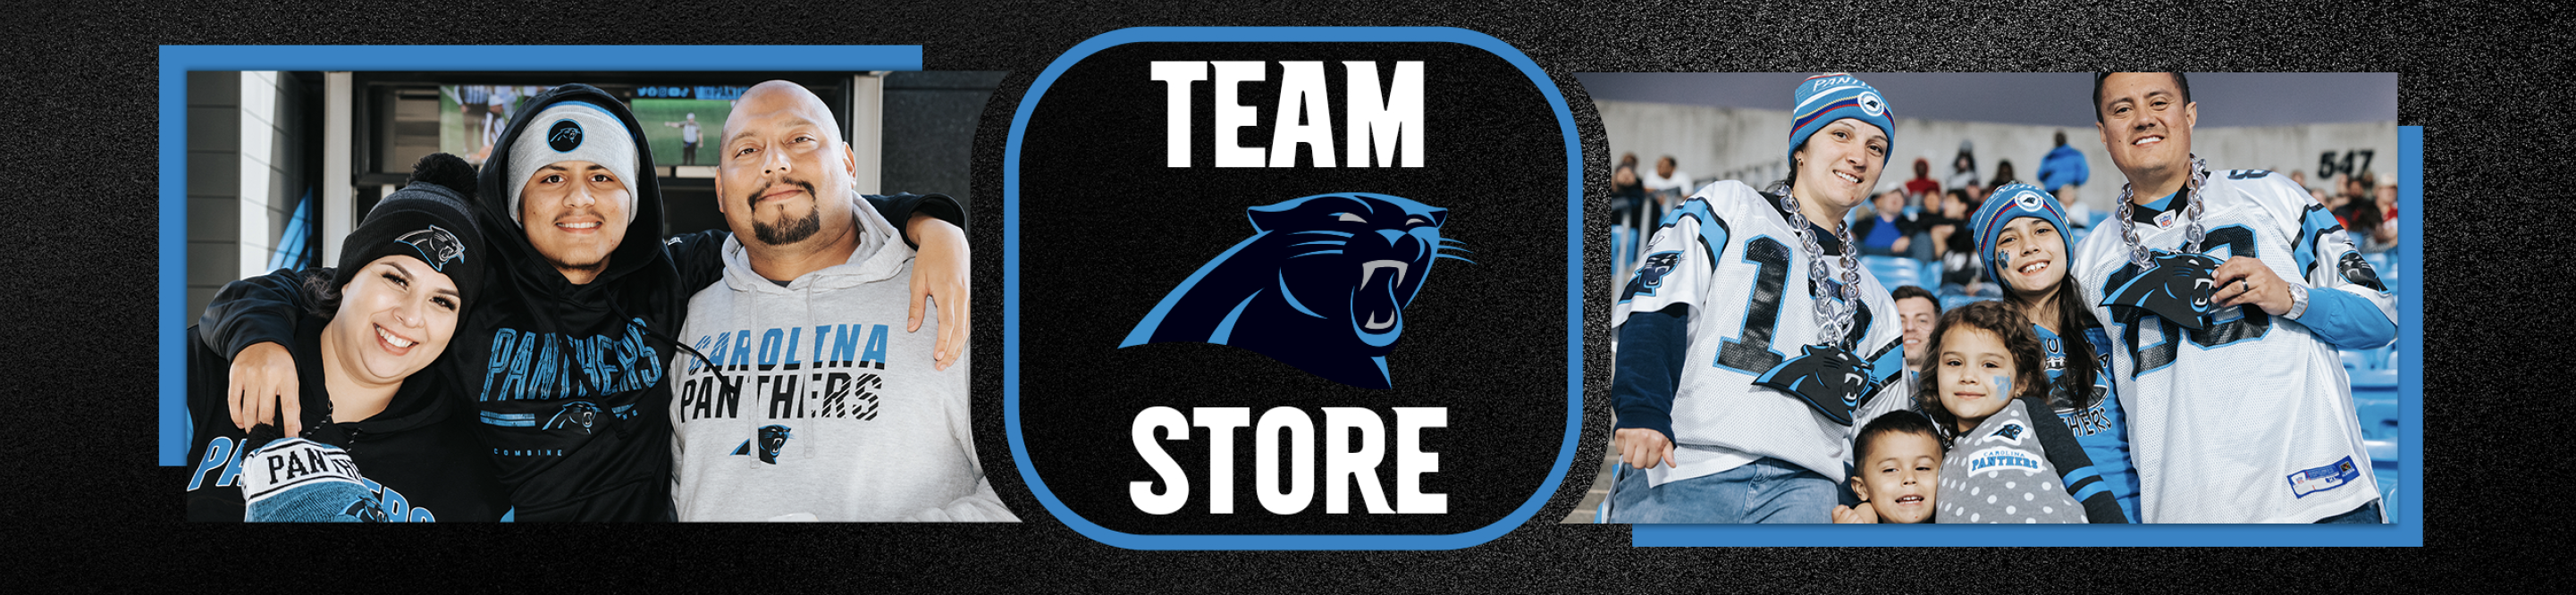 Carolina Panthers Team Store - Third Ward - 7 tips from 669 visitors